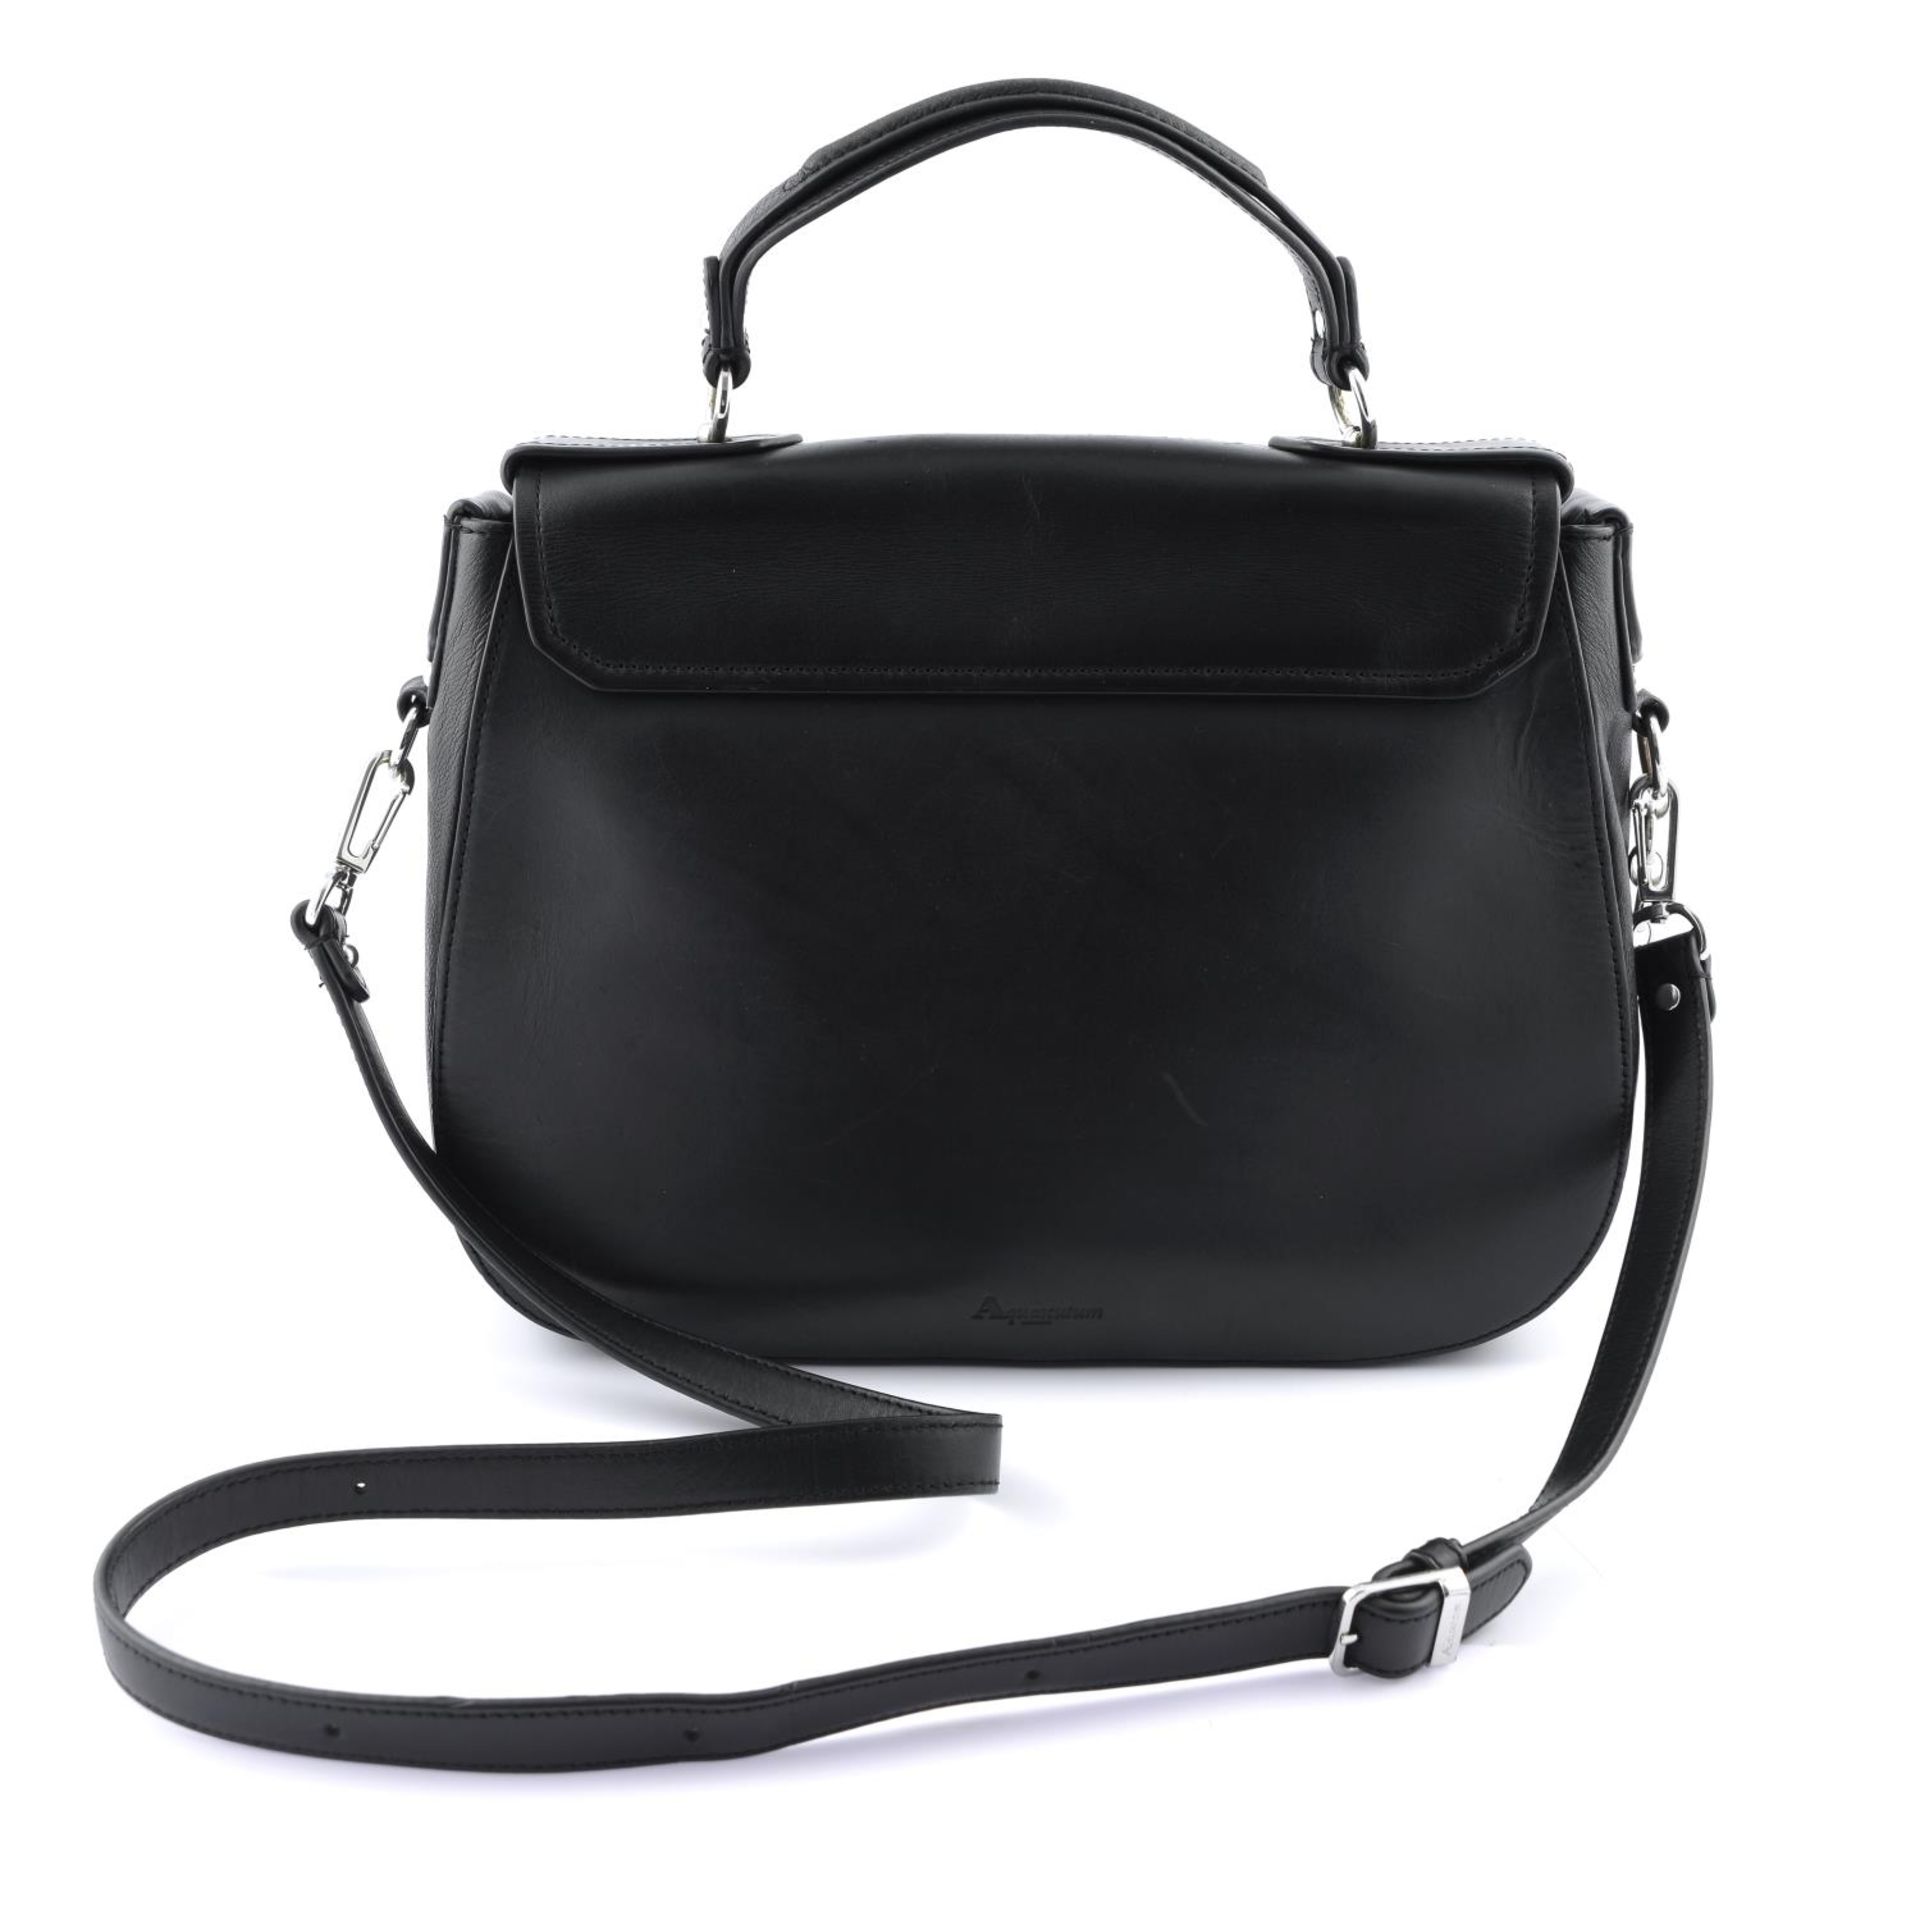 AQUASCUTUM - a black leather satchel. - Image 2 of 6